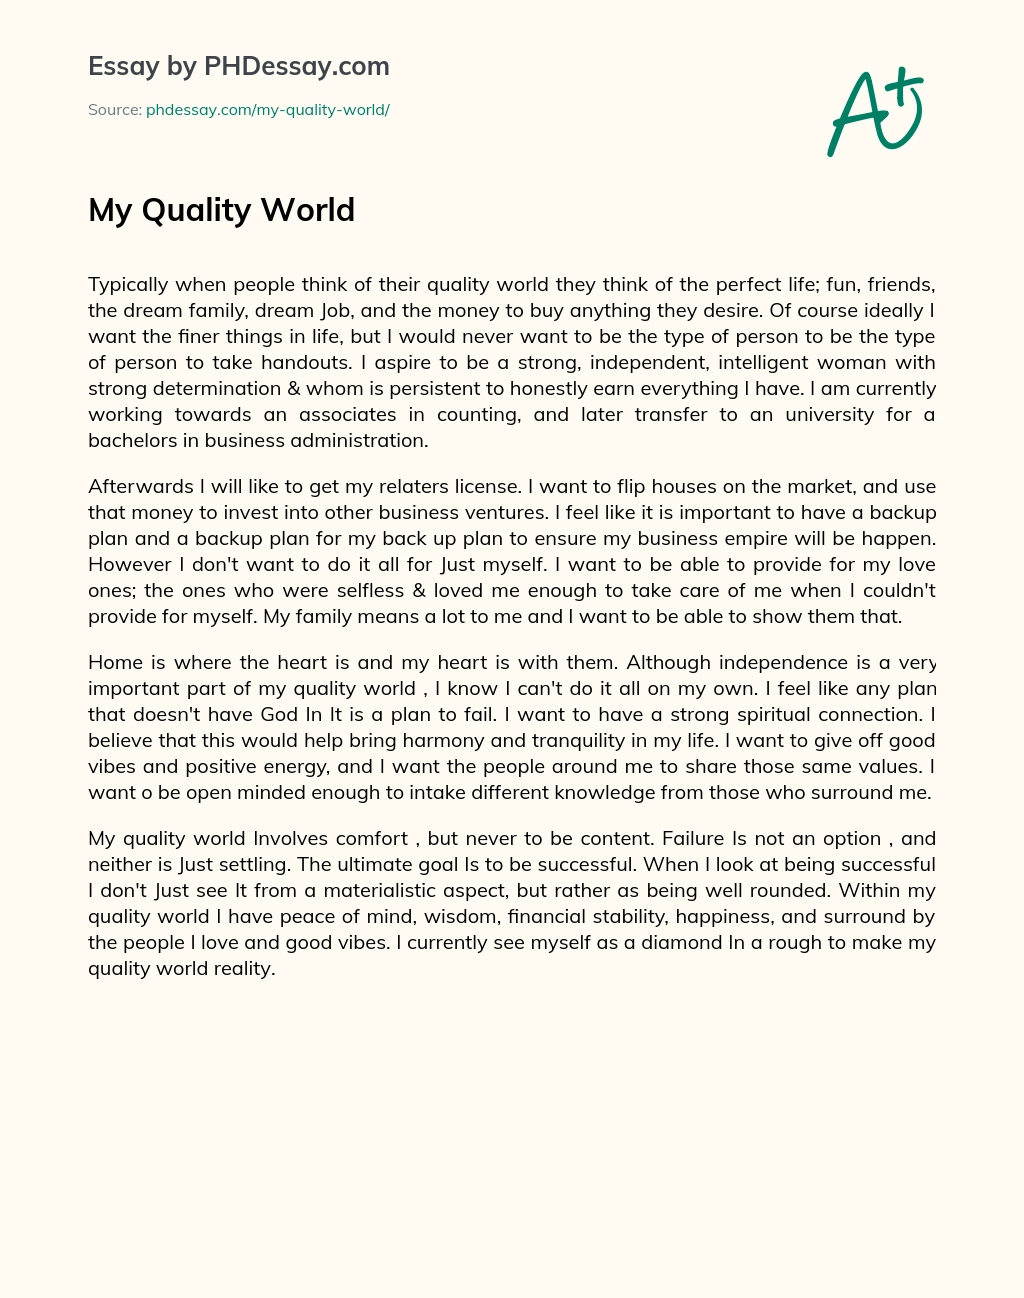 My Quality World essay